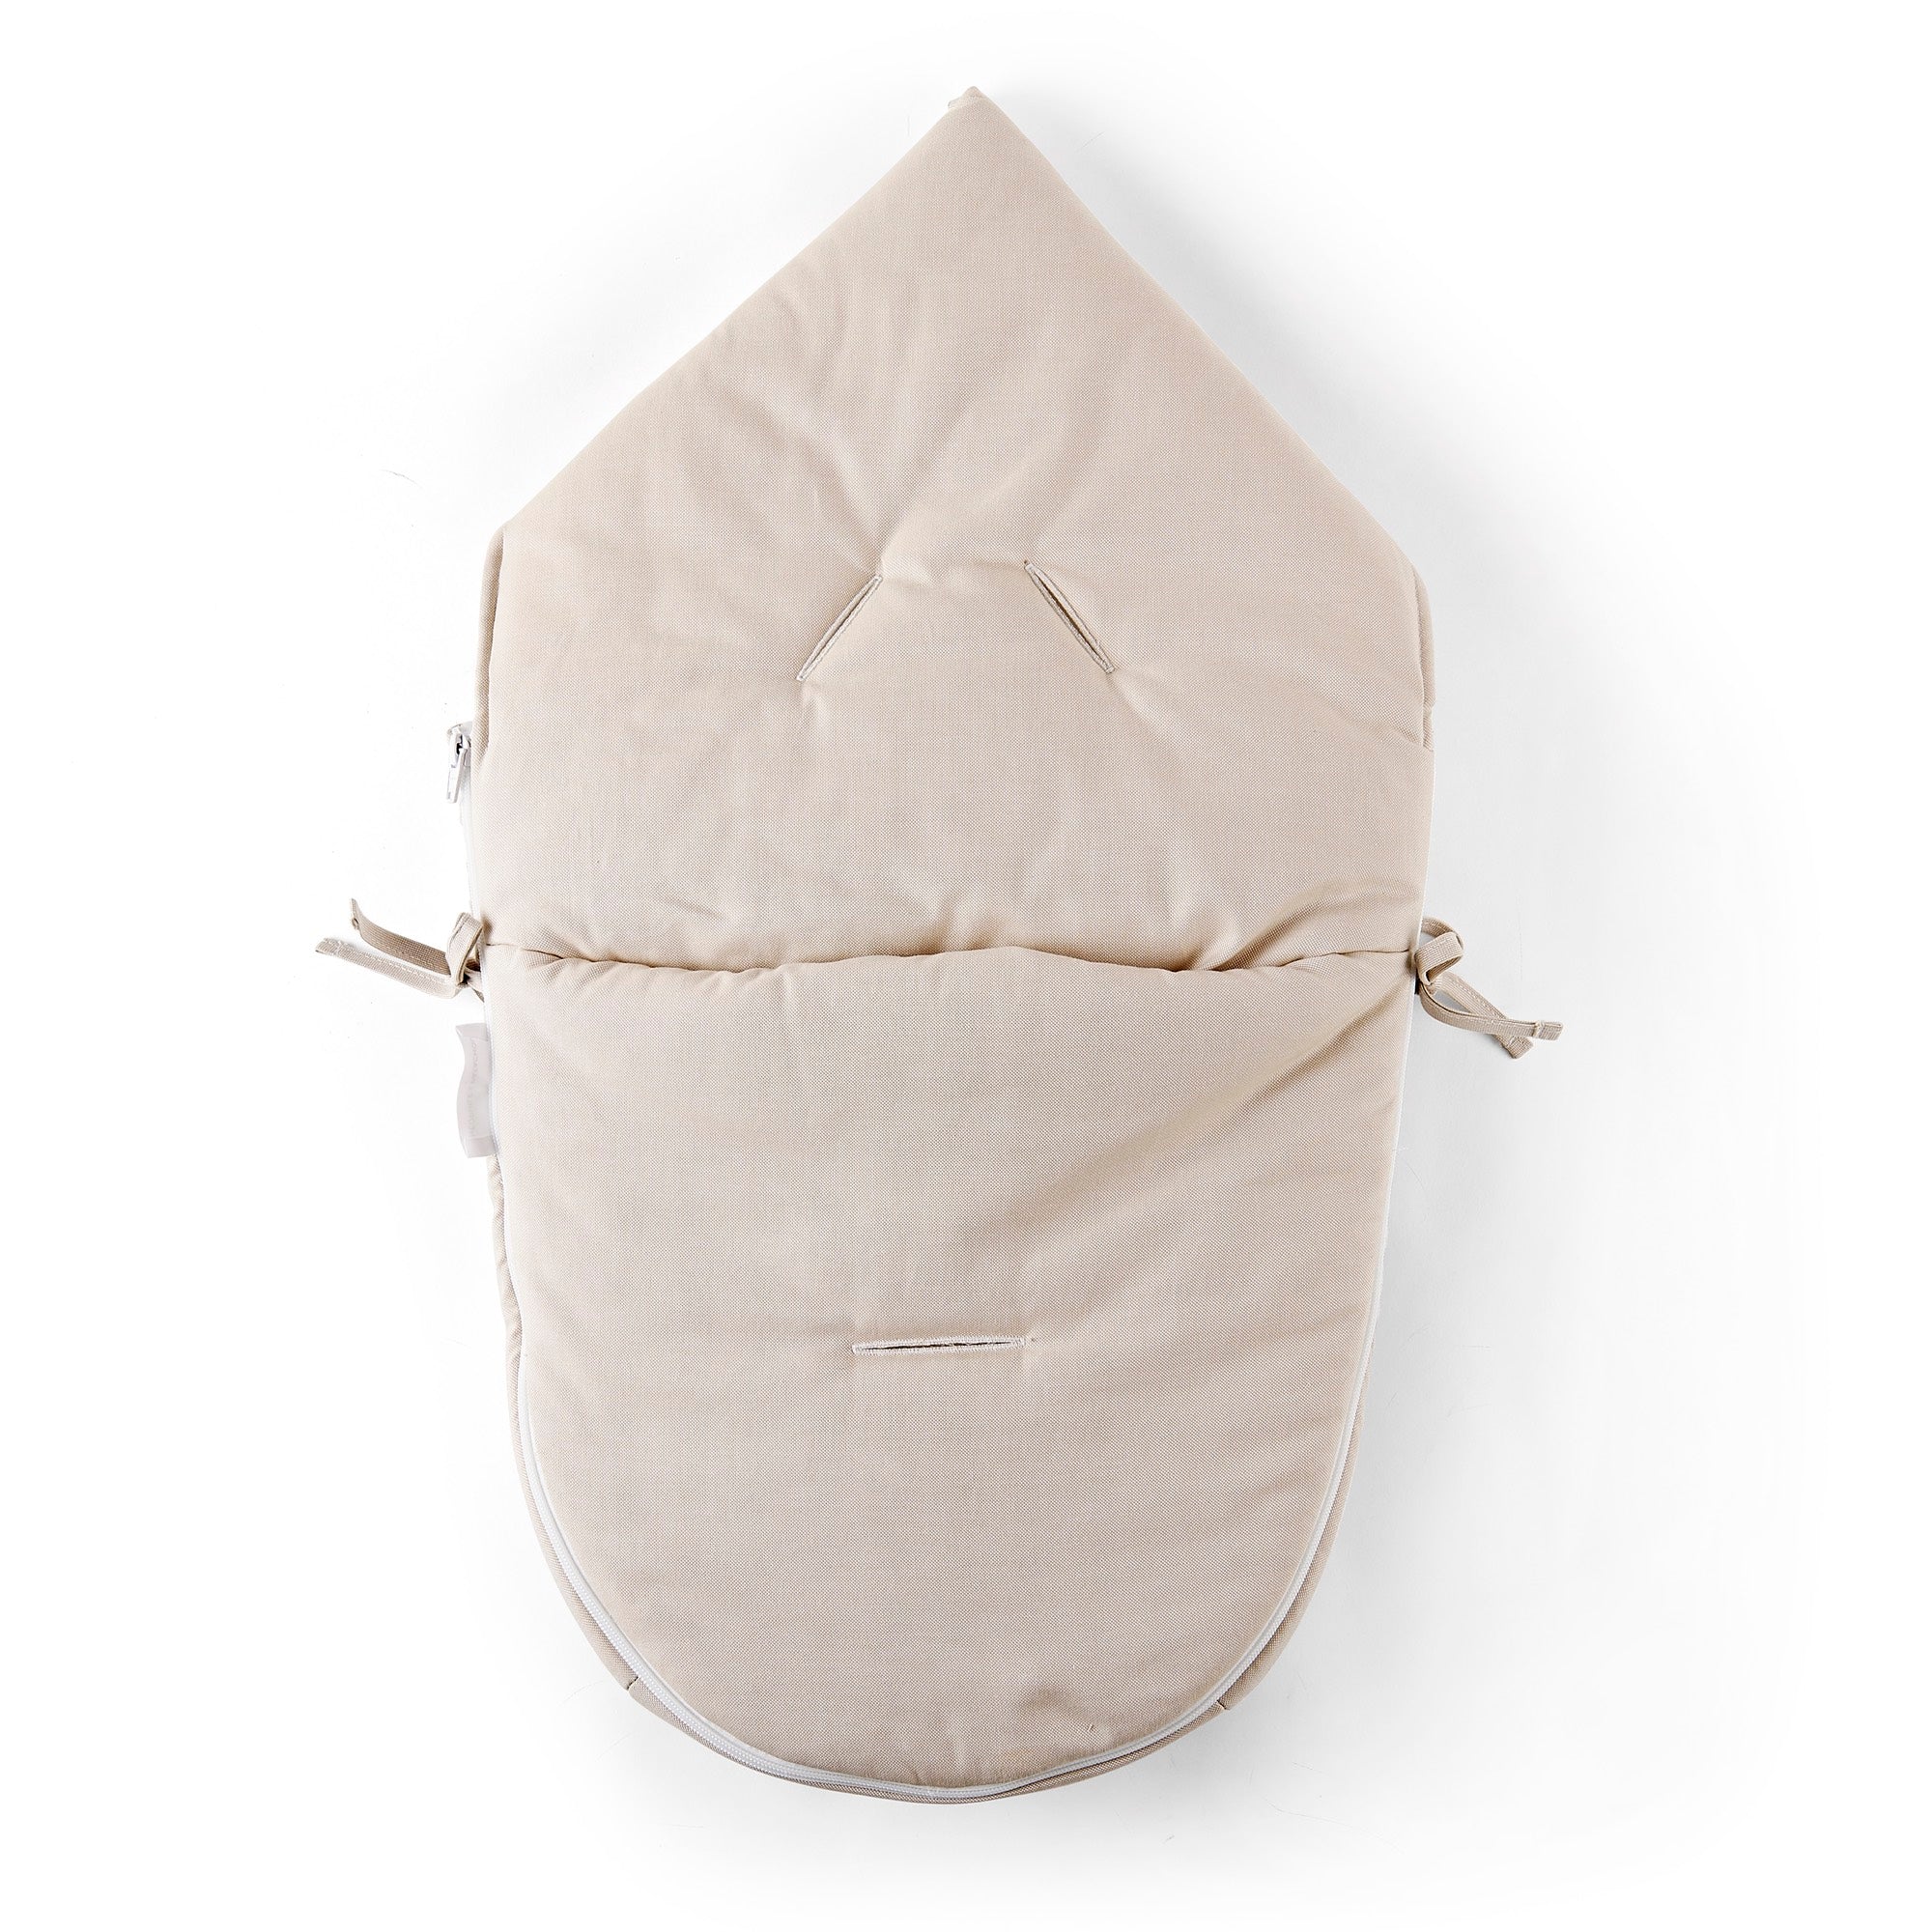 Theophile & Patachou Hooded Sleeping Bag for Car Seat - Safari